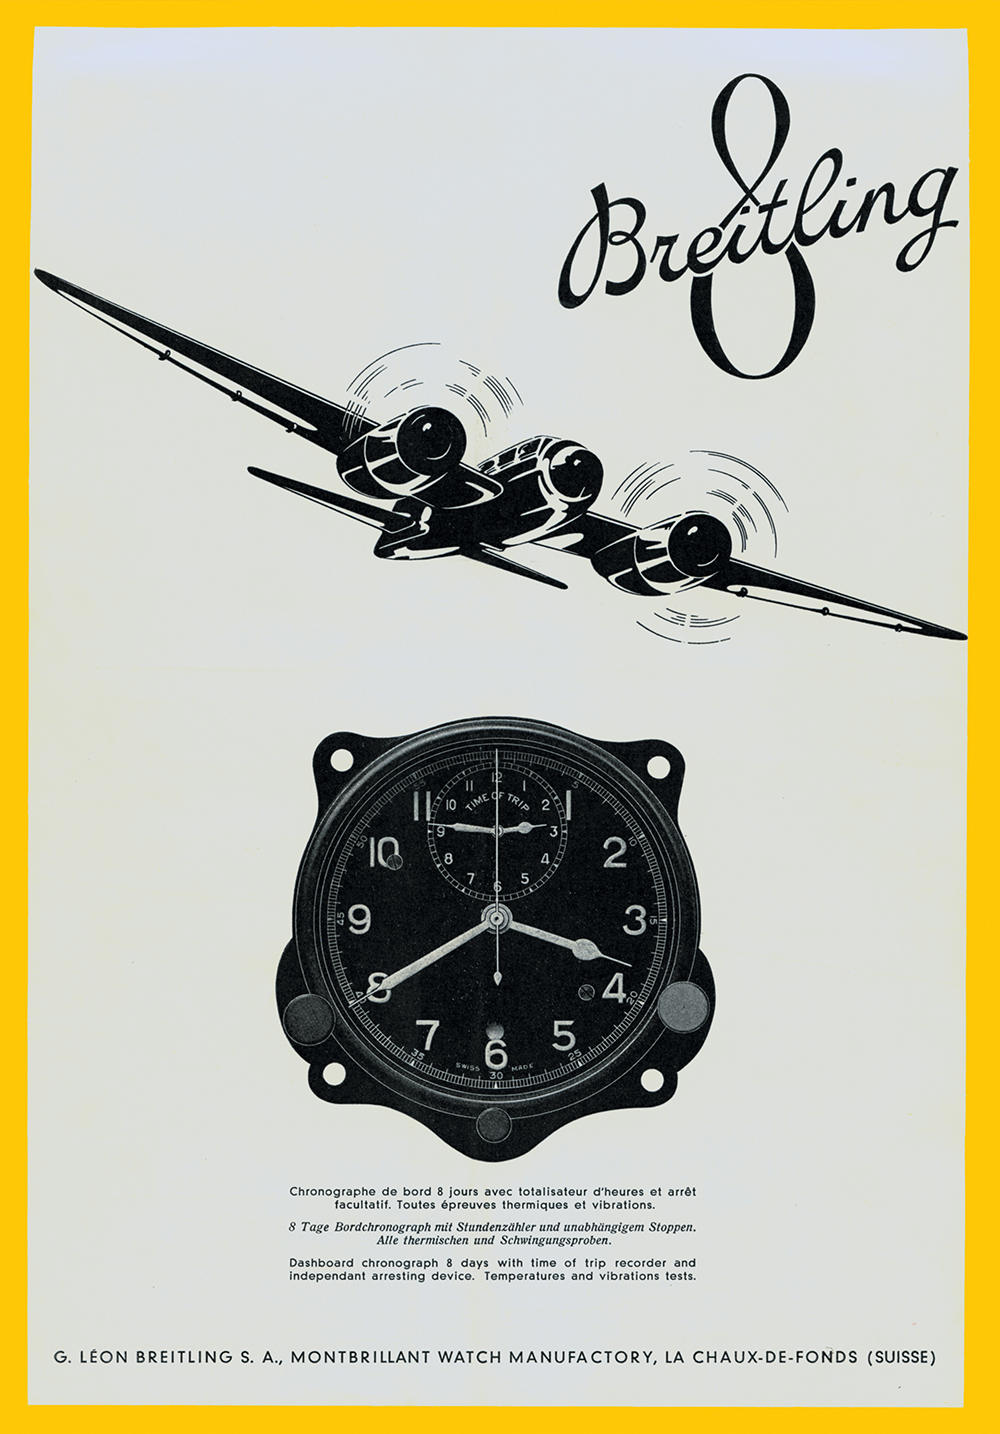 Huit航空飞行部门1941年广告图.jpg